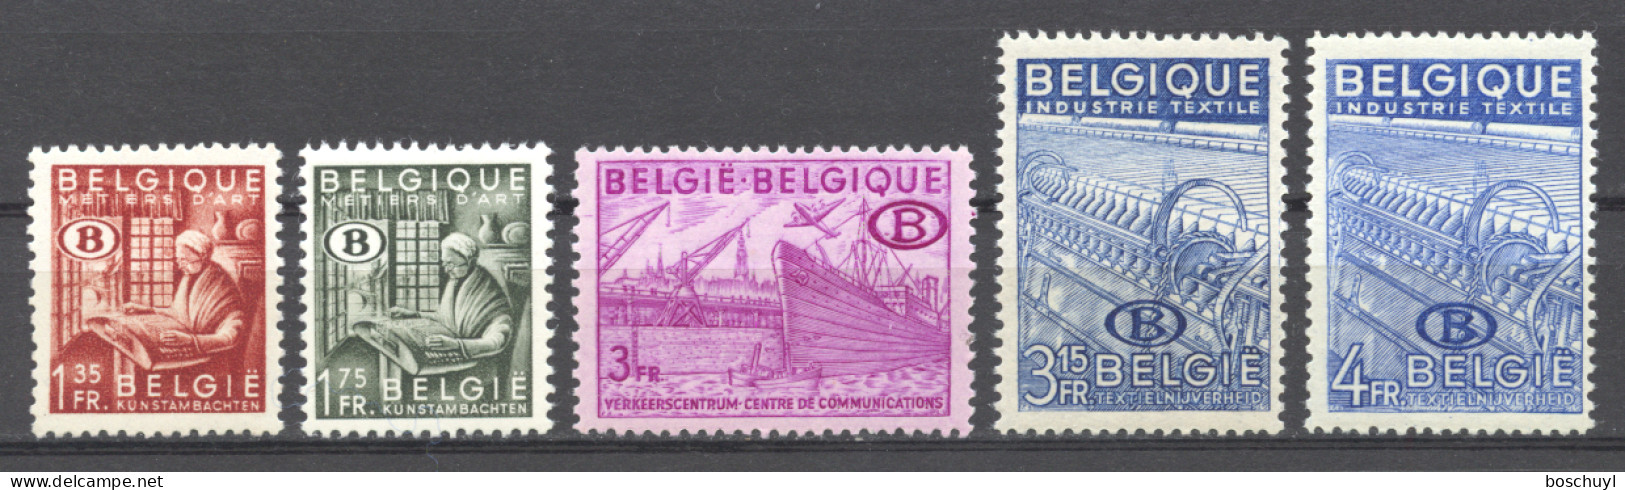 Belgium, 1948-1949, Service Stamps, Export Promotion, MNH, Michel 42-46 - Postfris